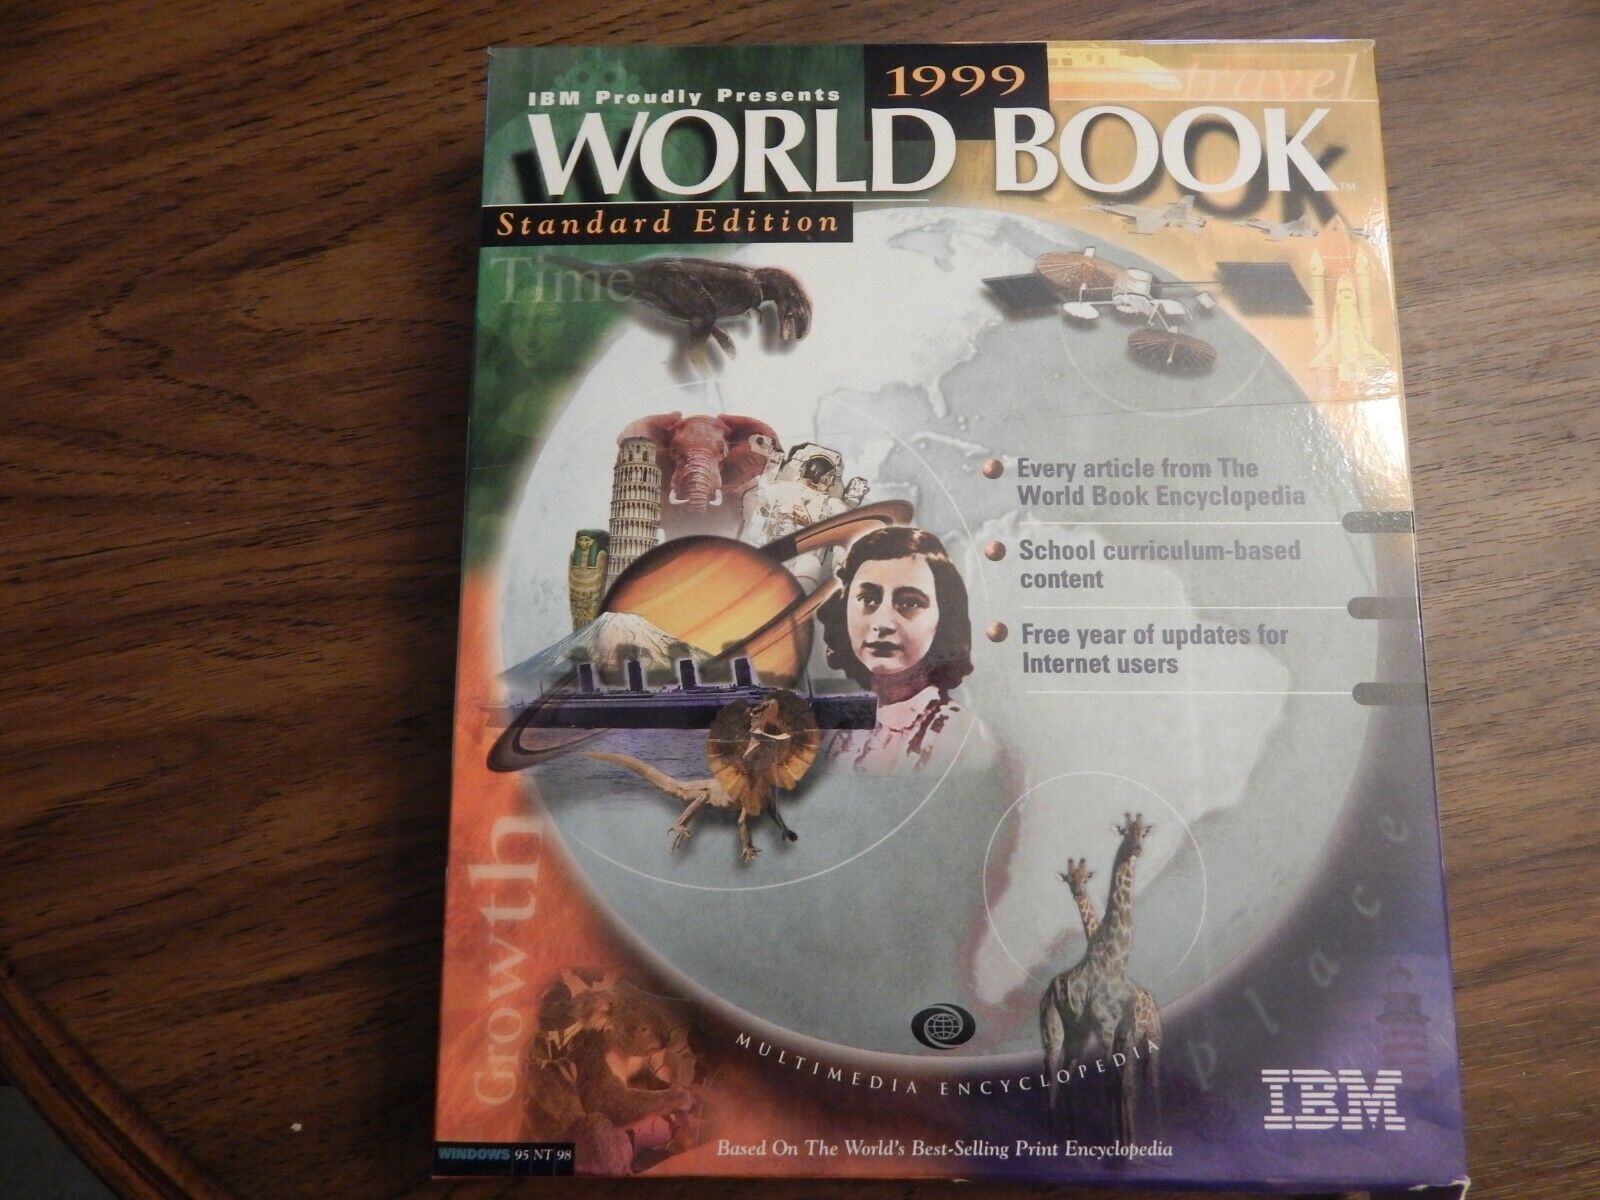 Vintage IBM 1999 World Book, Standard Edition Multimedia Encyclopedia CD ROM